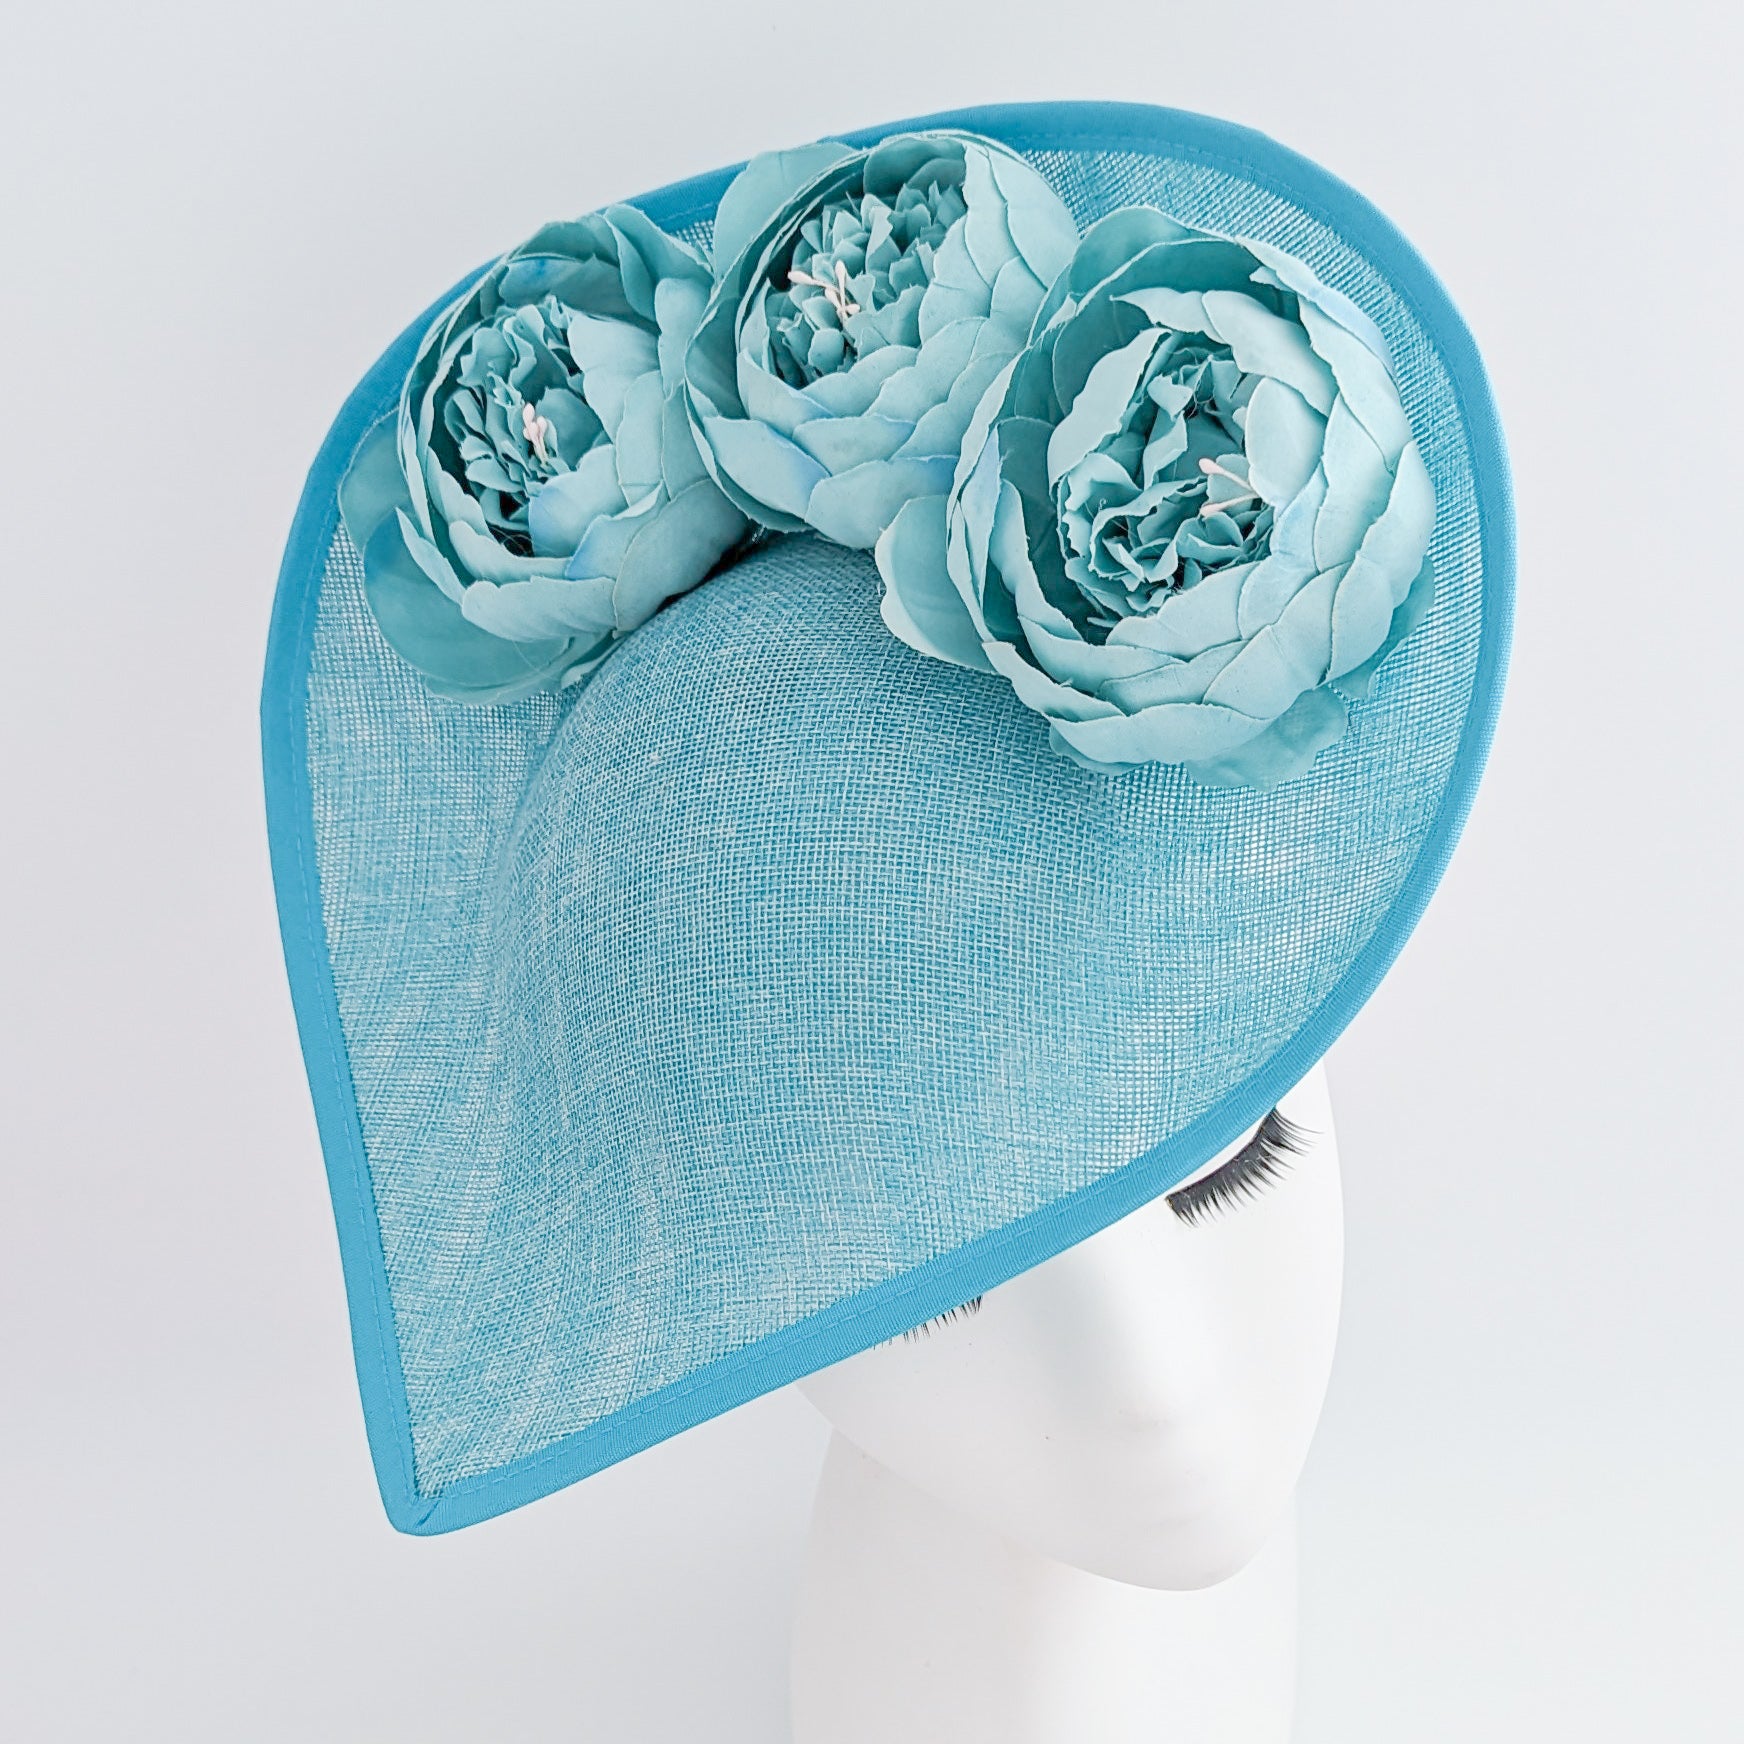 Aqua sky blue large teardrop peony flower fascinator hat